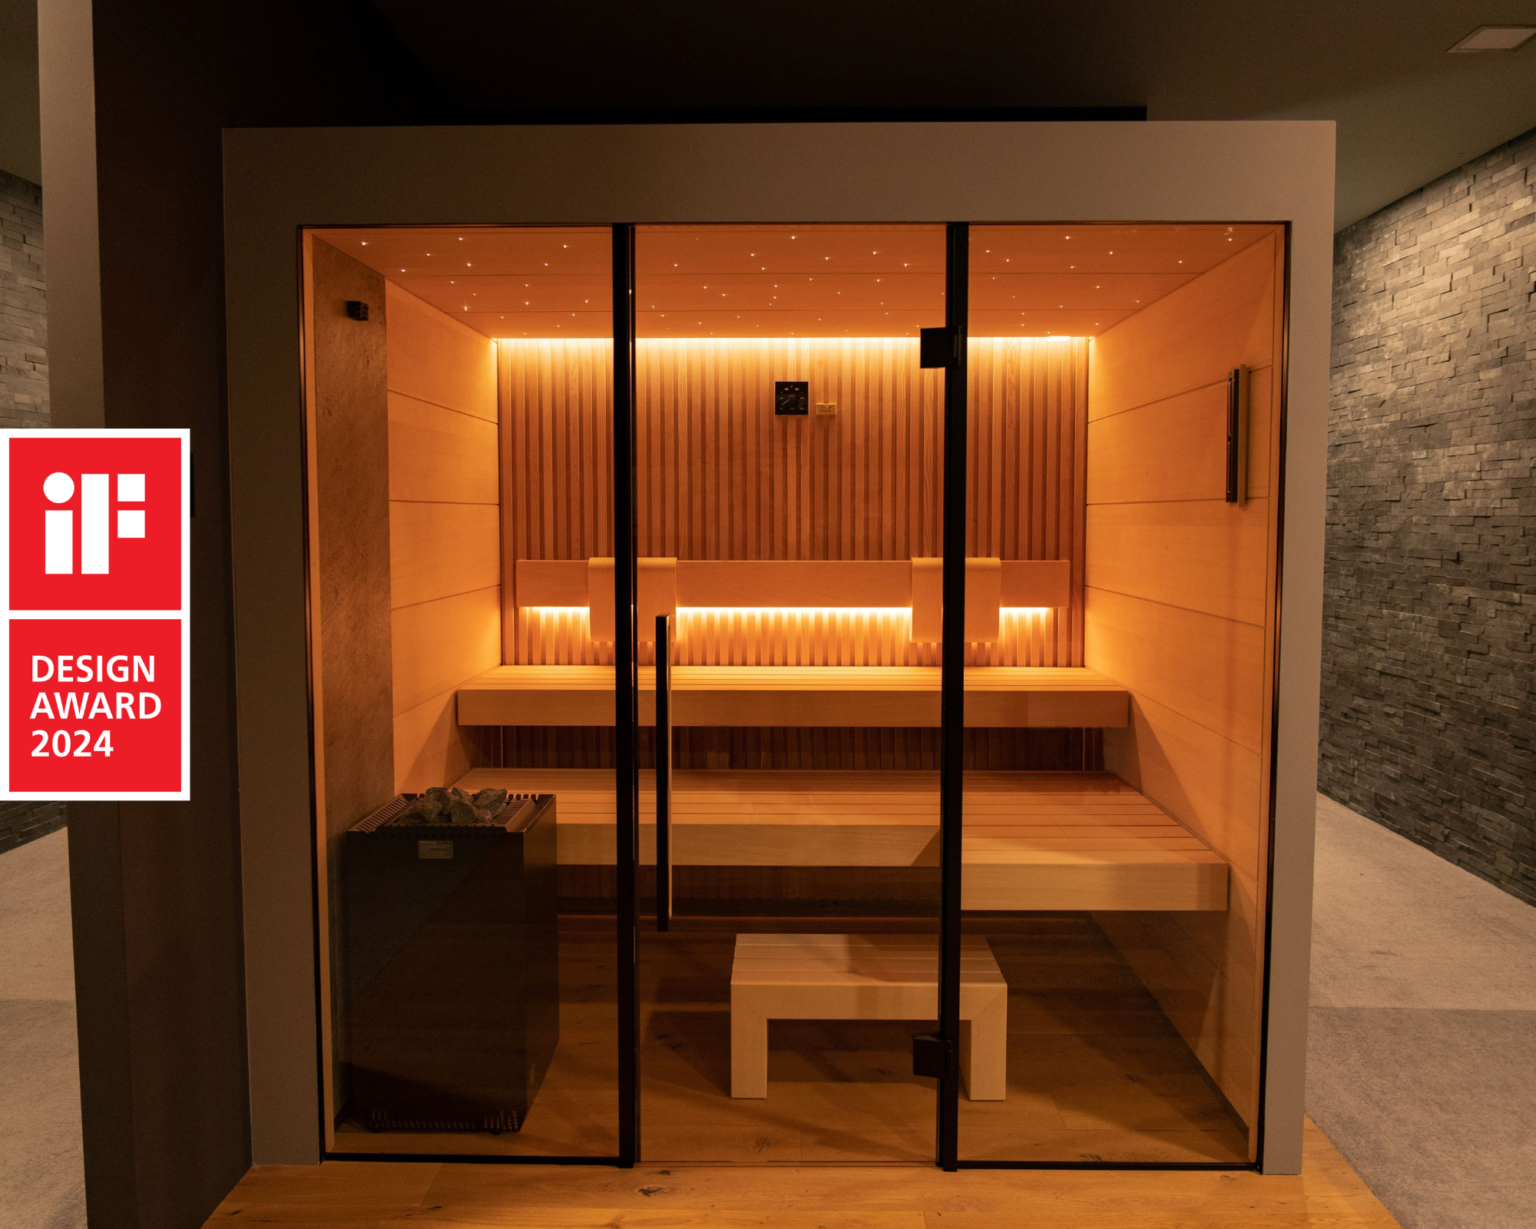 The TAO CONTI sauna has won the prestigious iF DESIGN AWARD!